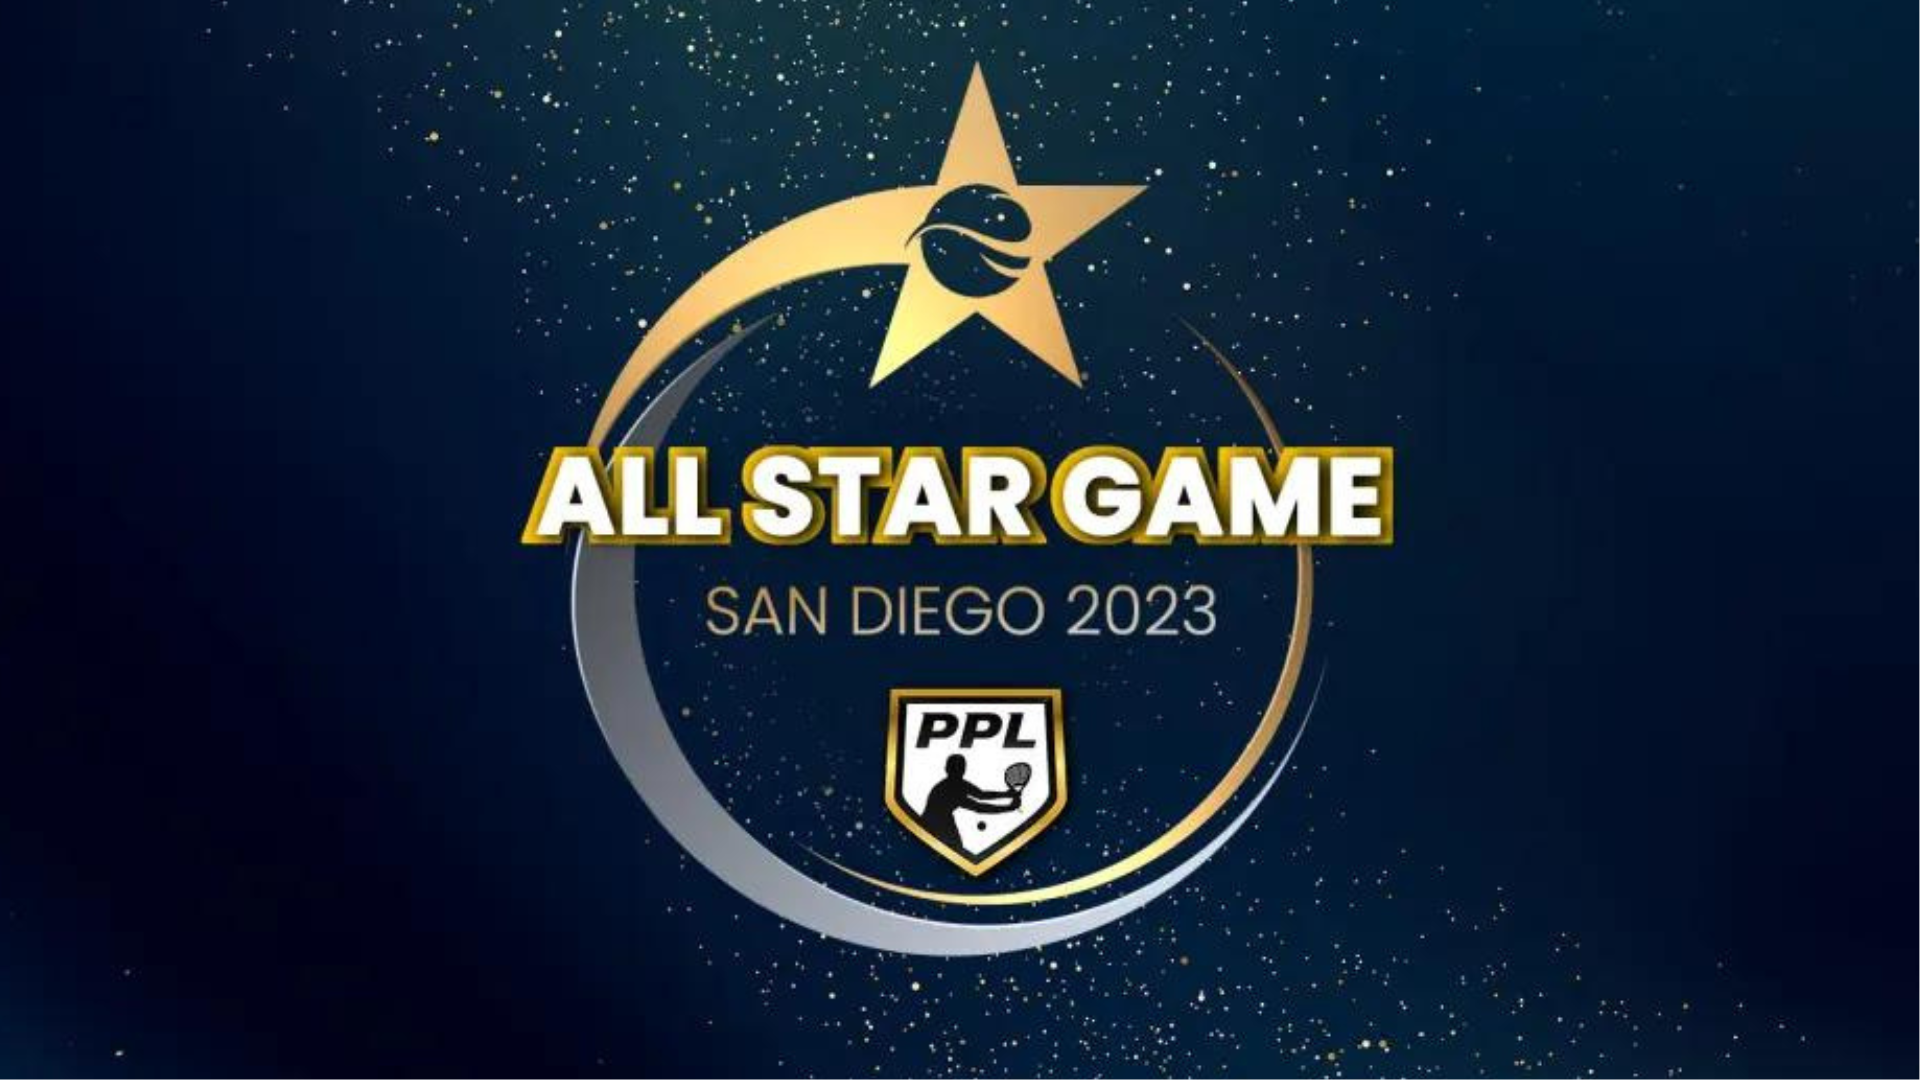 All Star Game PPL 2023 VS San Diego